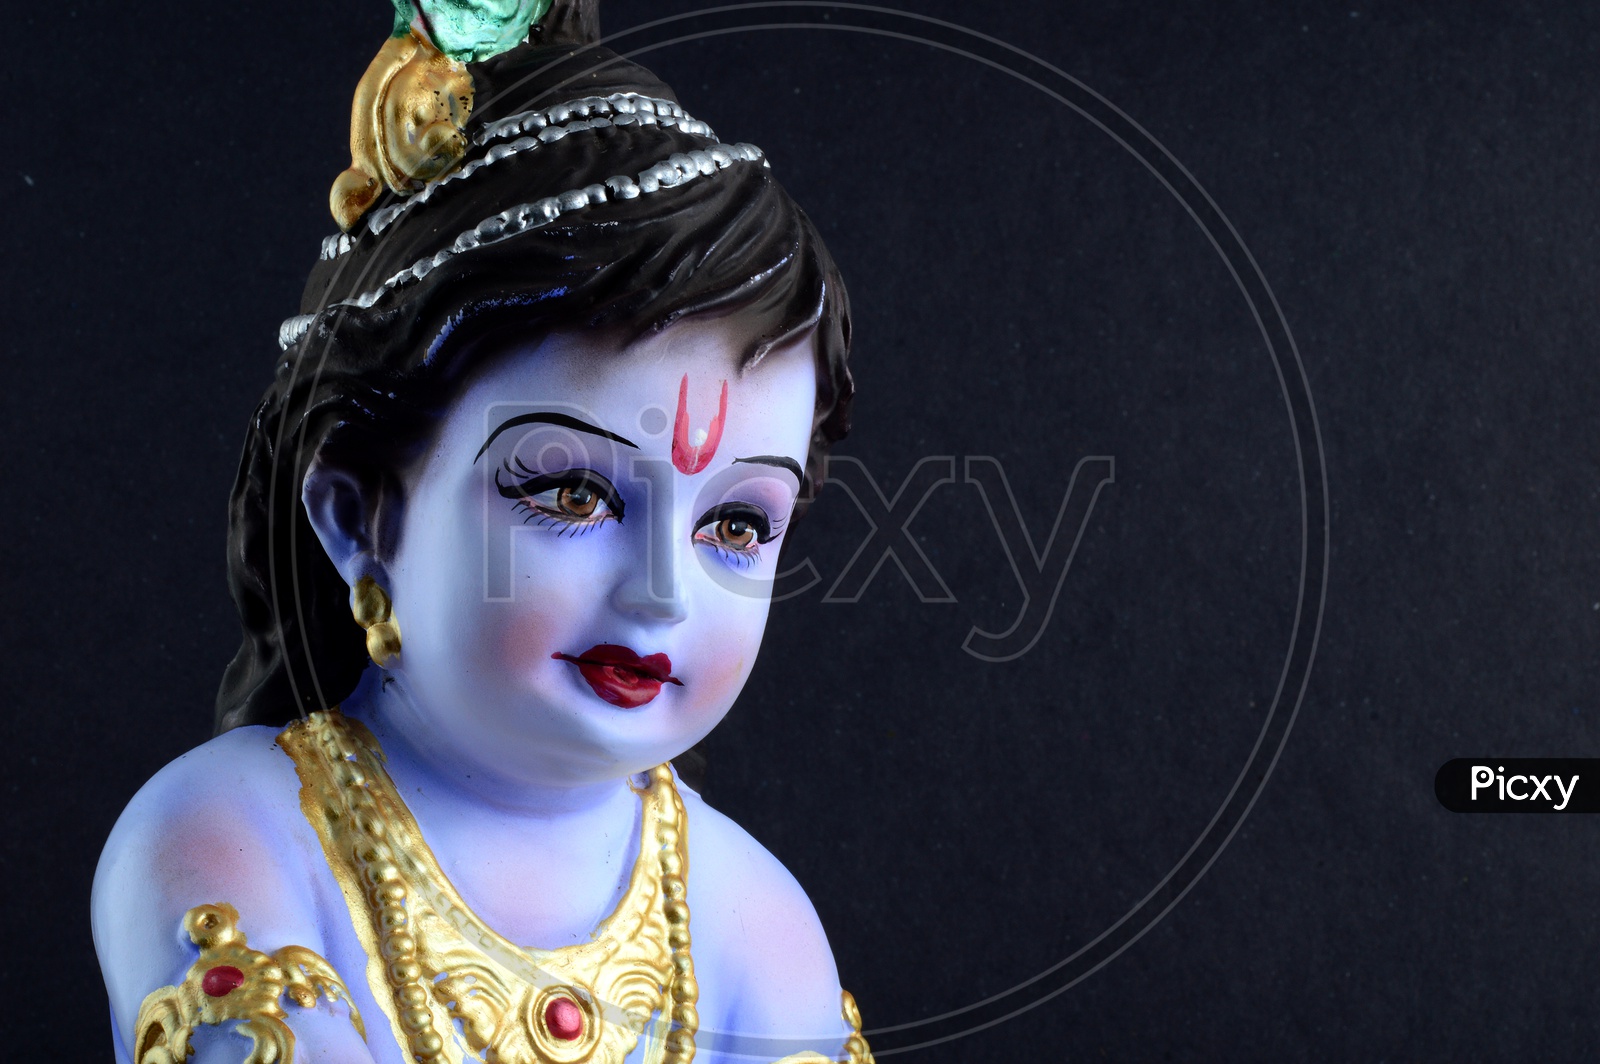 Little Krishna Idol on black background